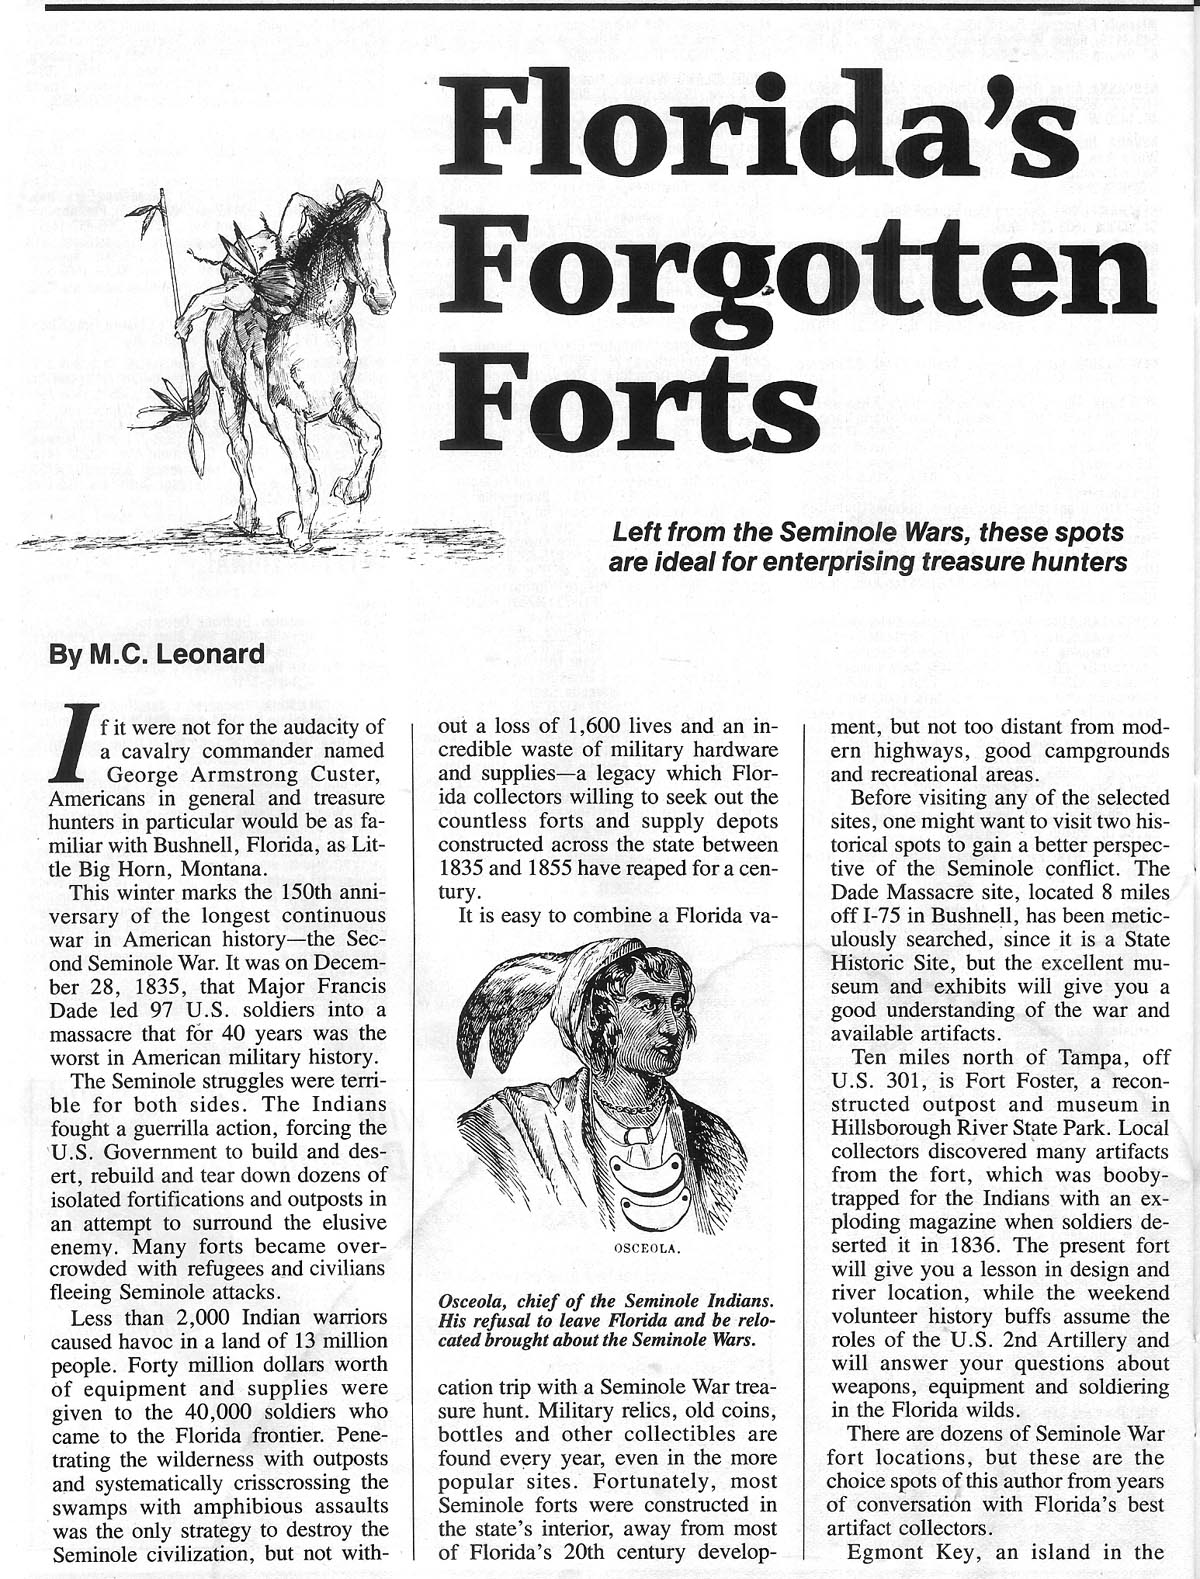 Article on Florida treasure sites by M. C. Bob Leonard